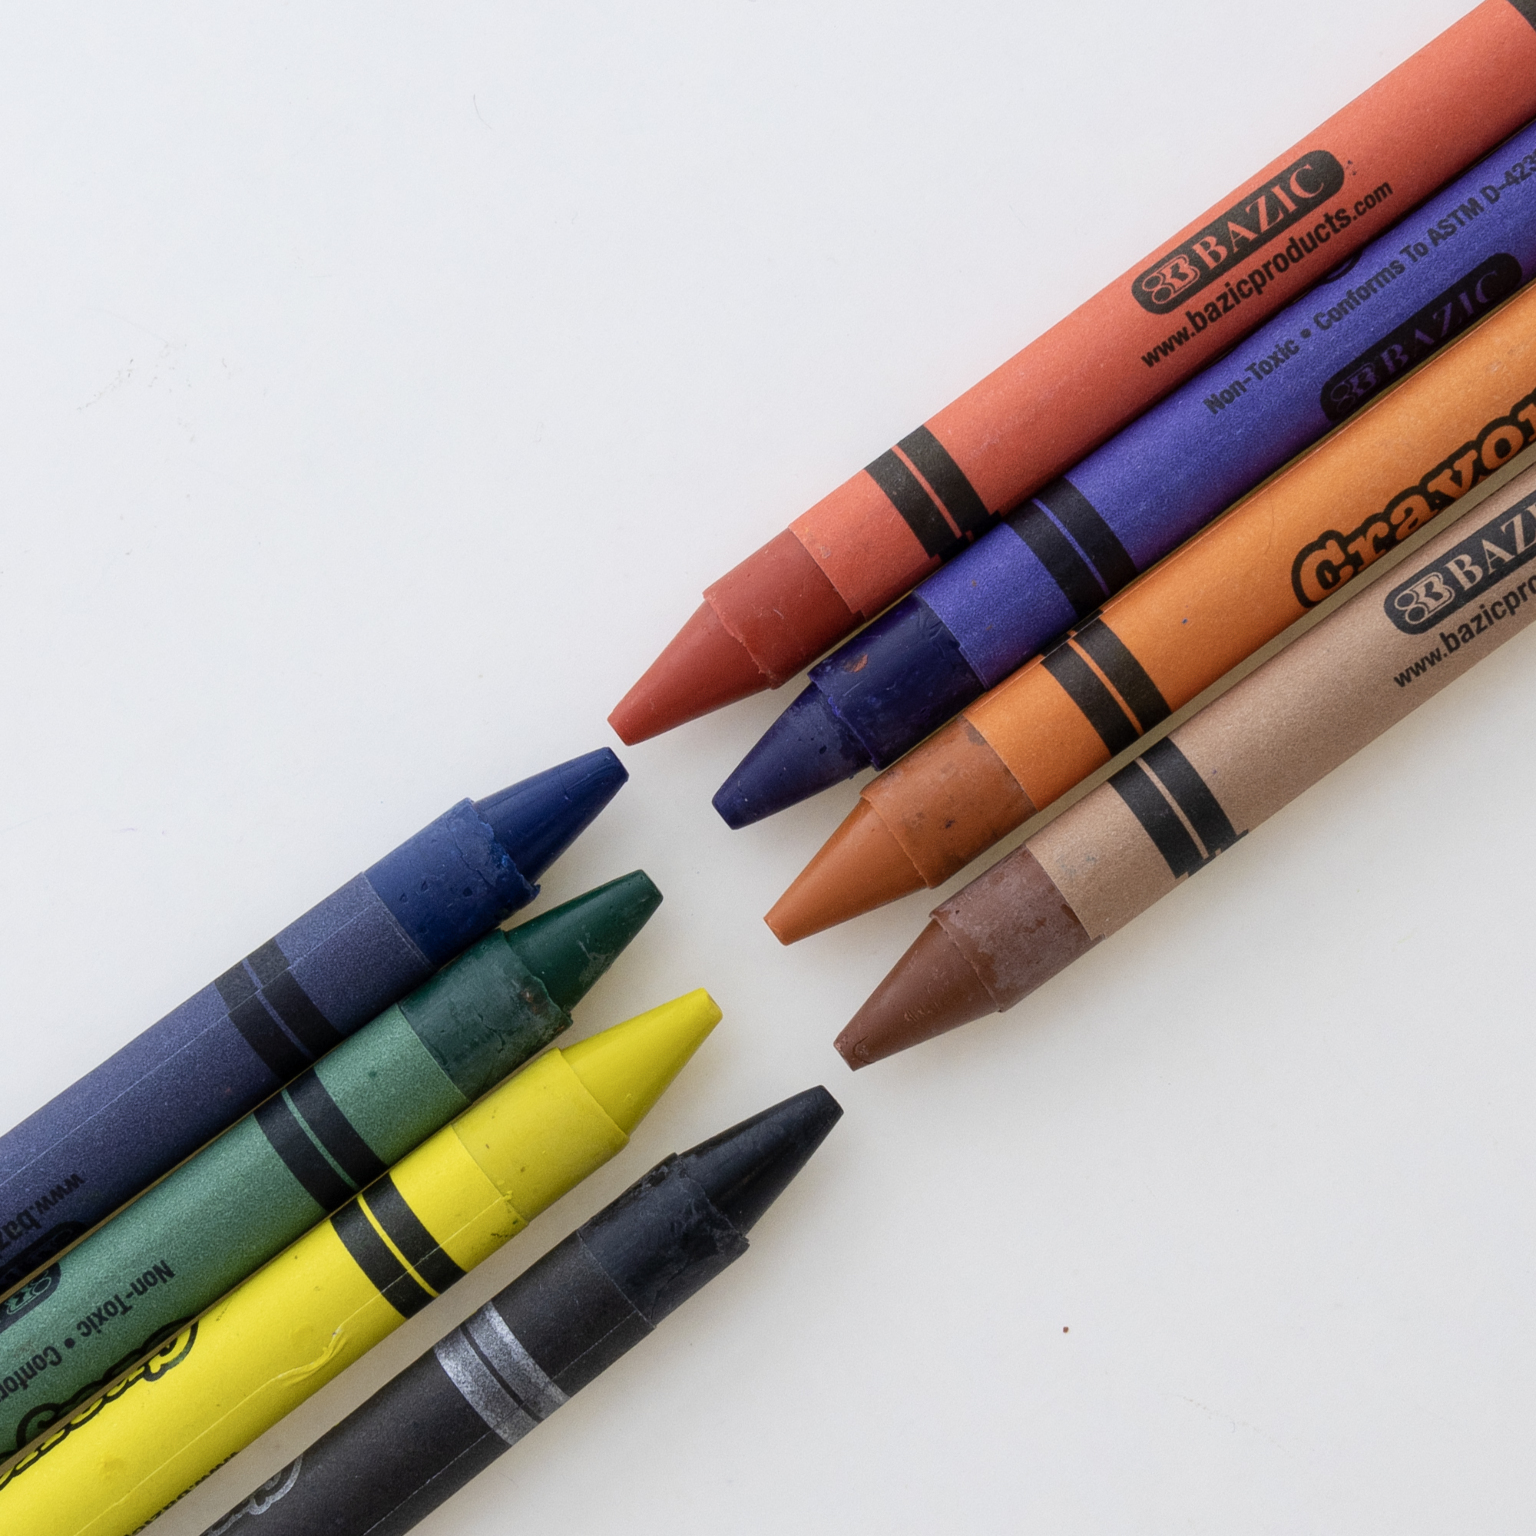 Wholesale Crayon Packs of 16 Colors - DollarDays